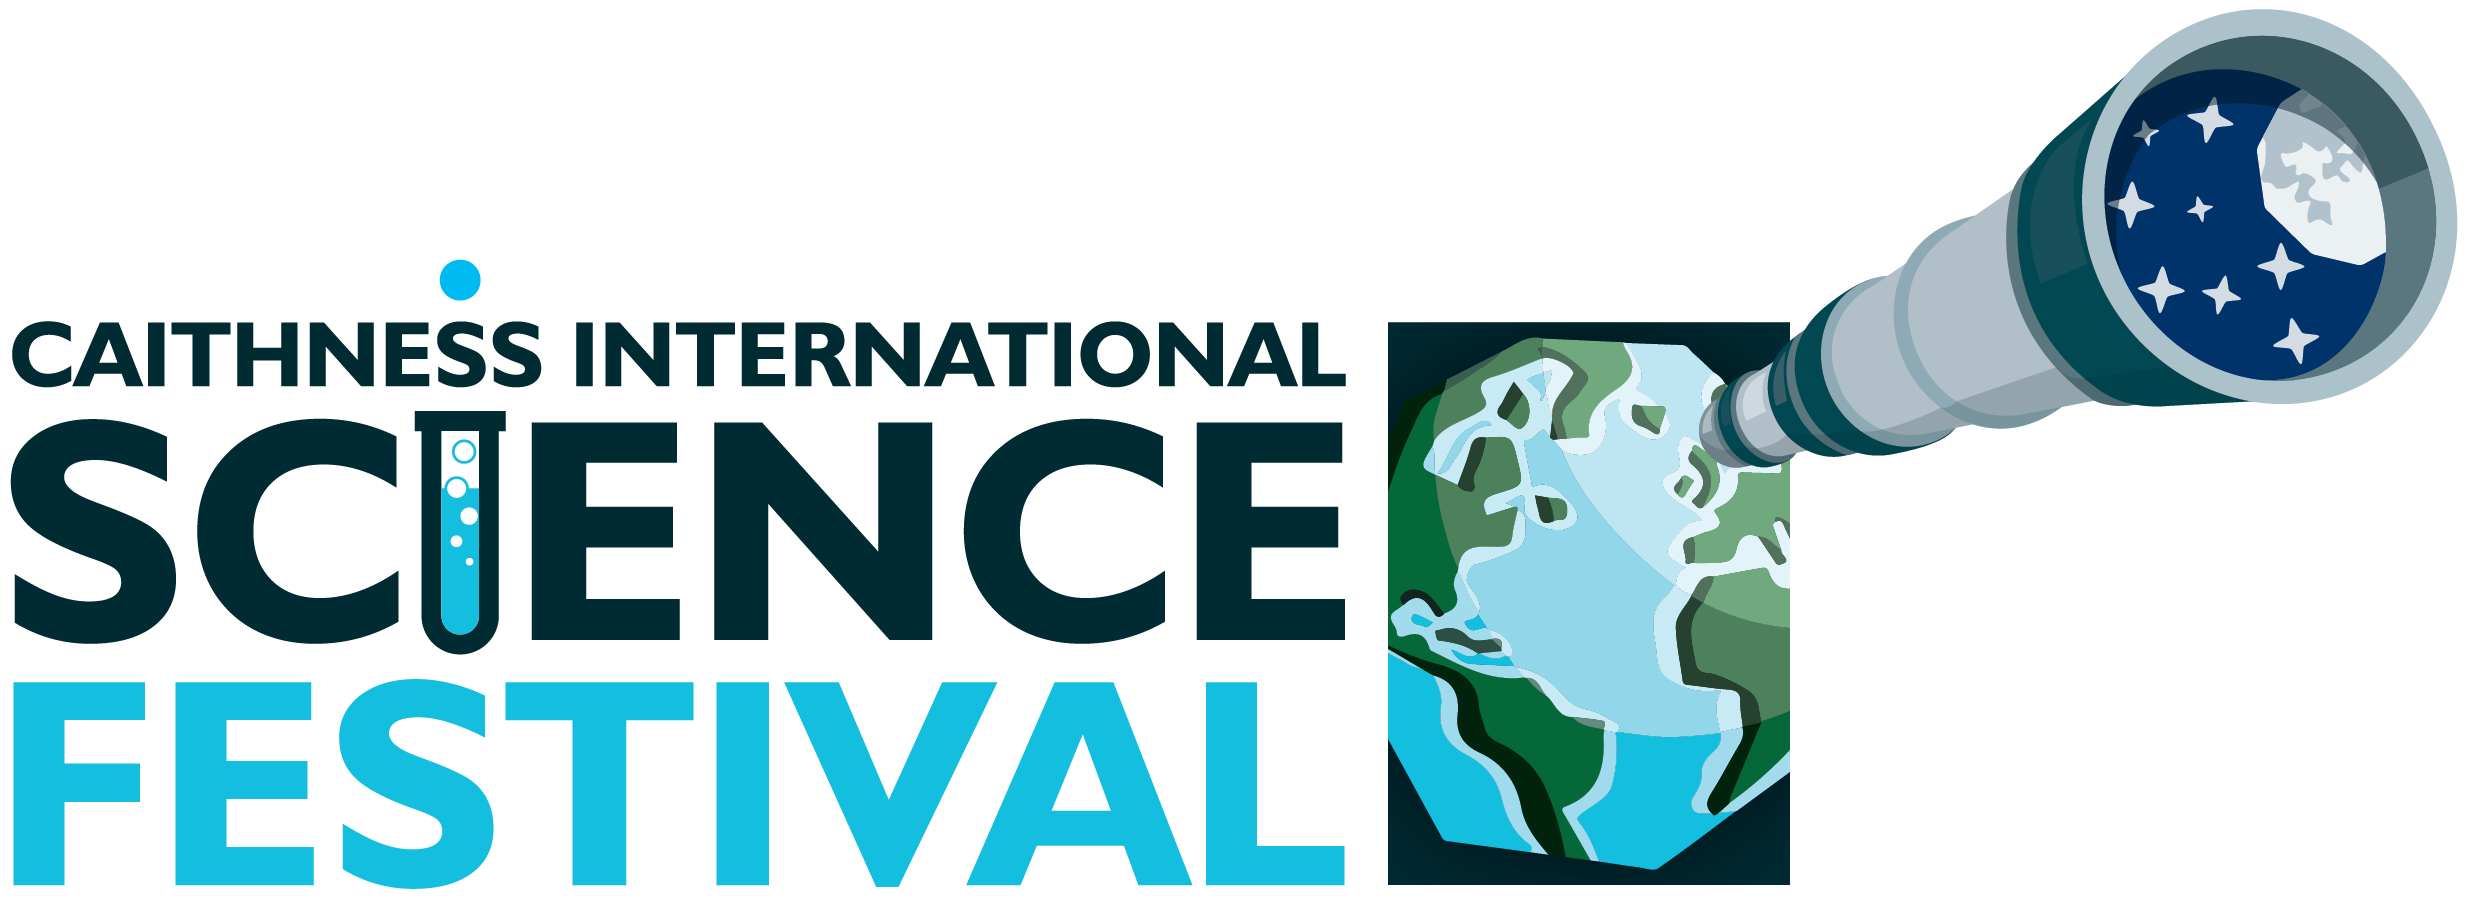 Caithness International Science Festival logo